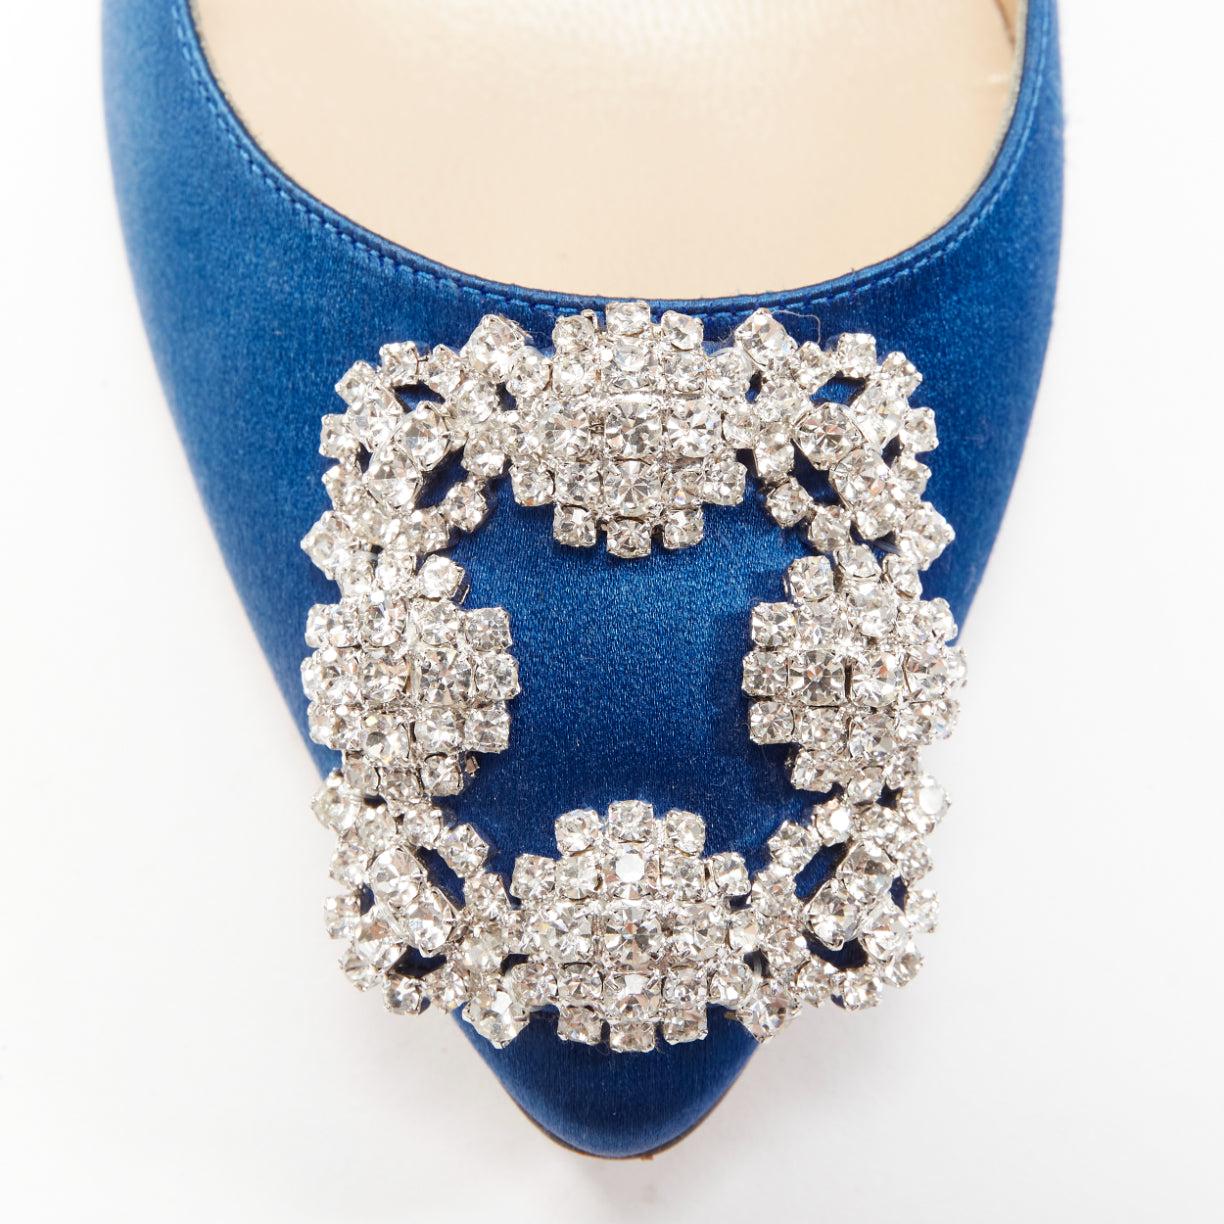 MANOLO BLAHNIK Hangisi 50 blue satin crystal buckle teacup heeled pumps EU36.5 For Sale 2